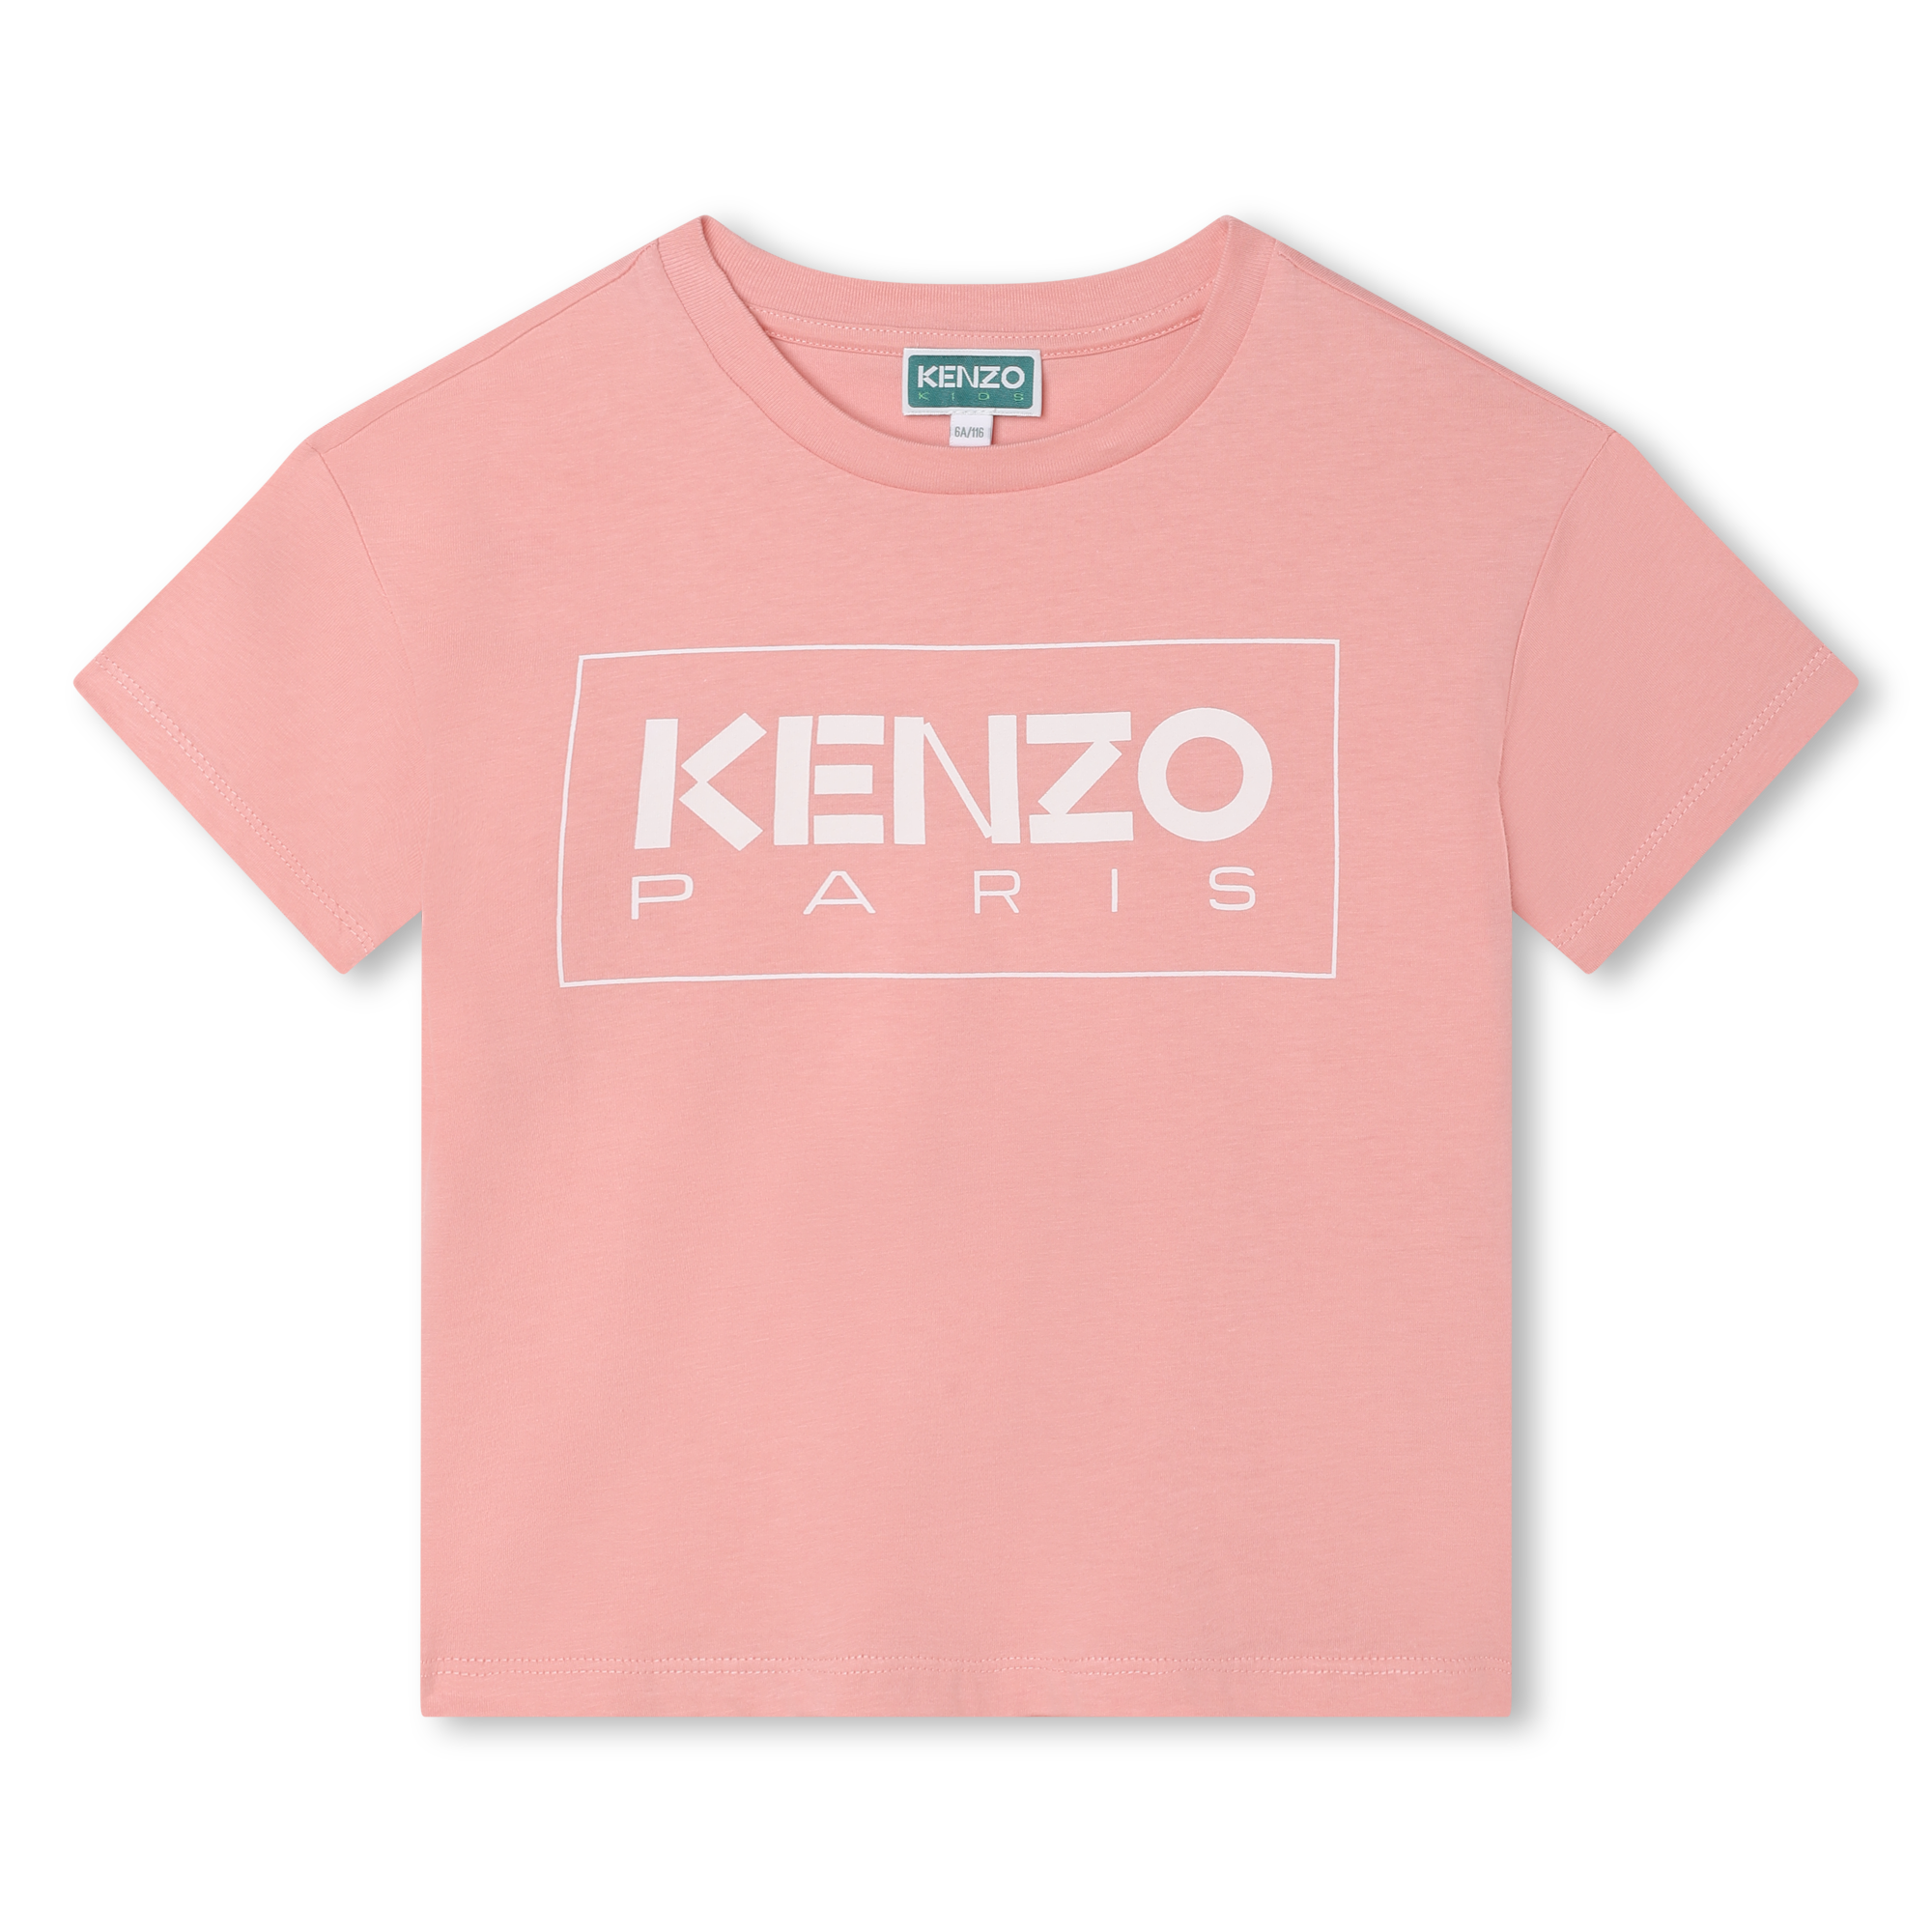 Kenzo Kids graphic-print short-sleeve dress - Red